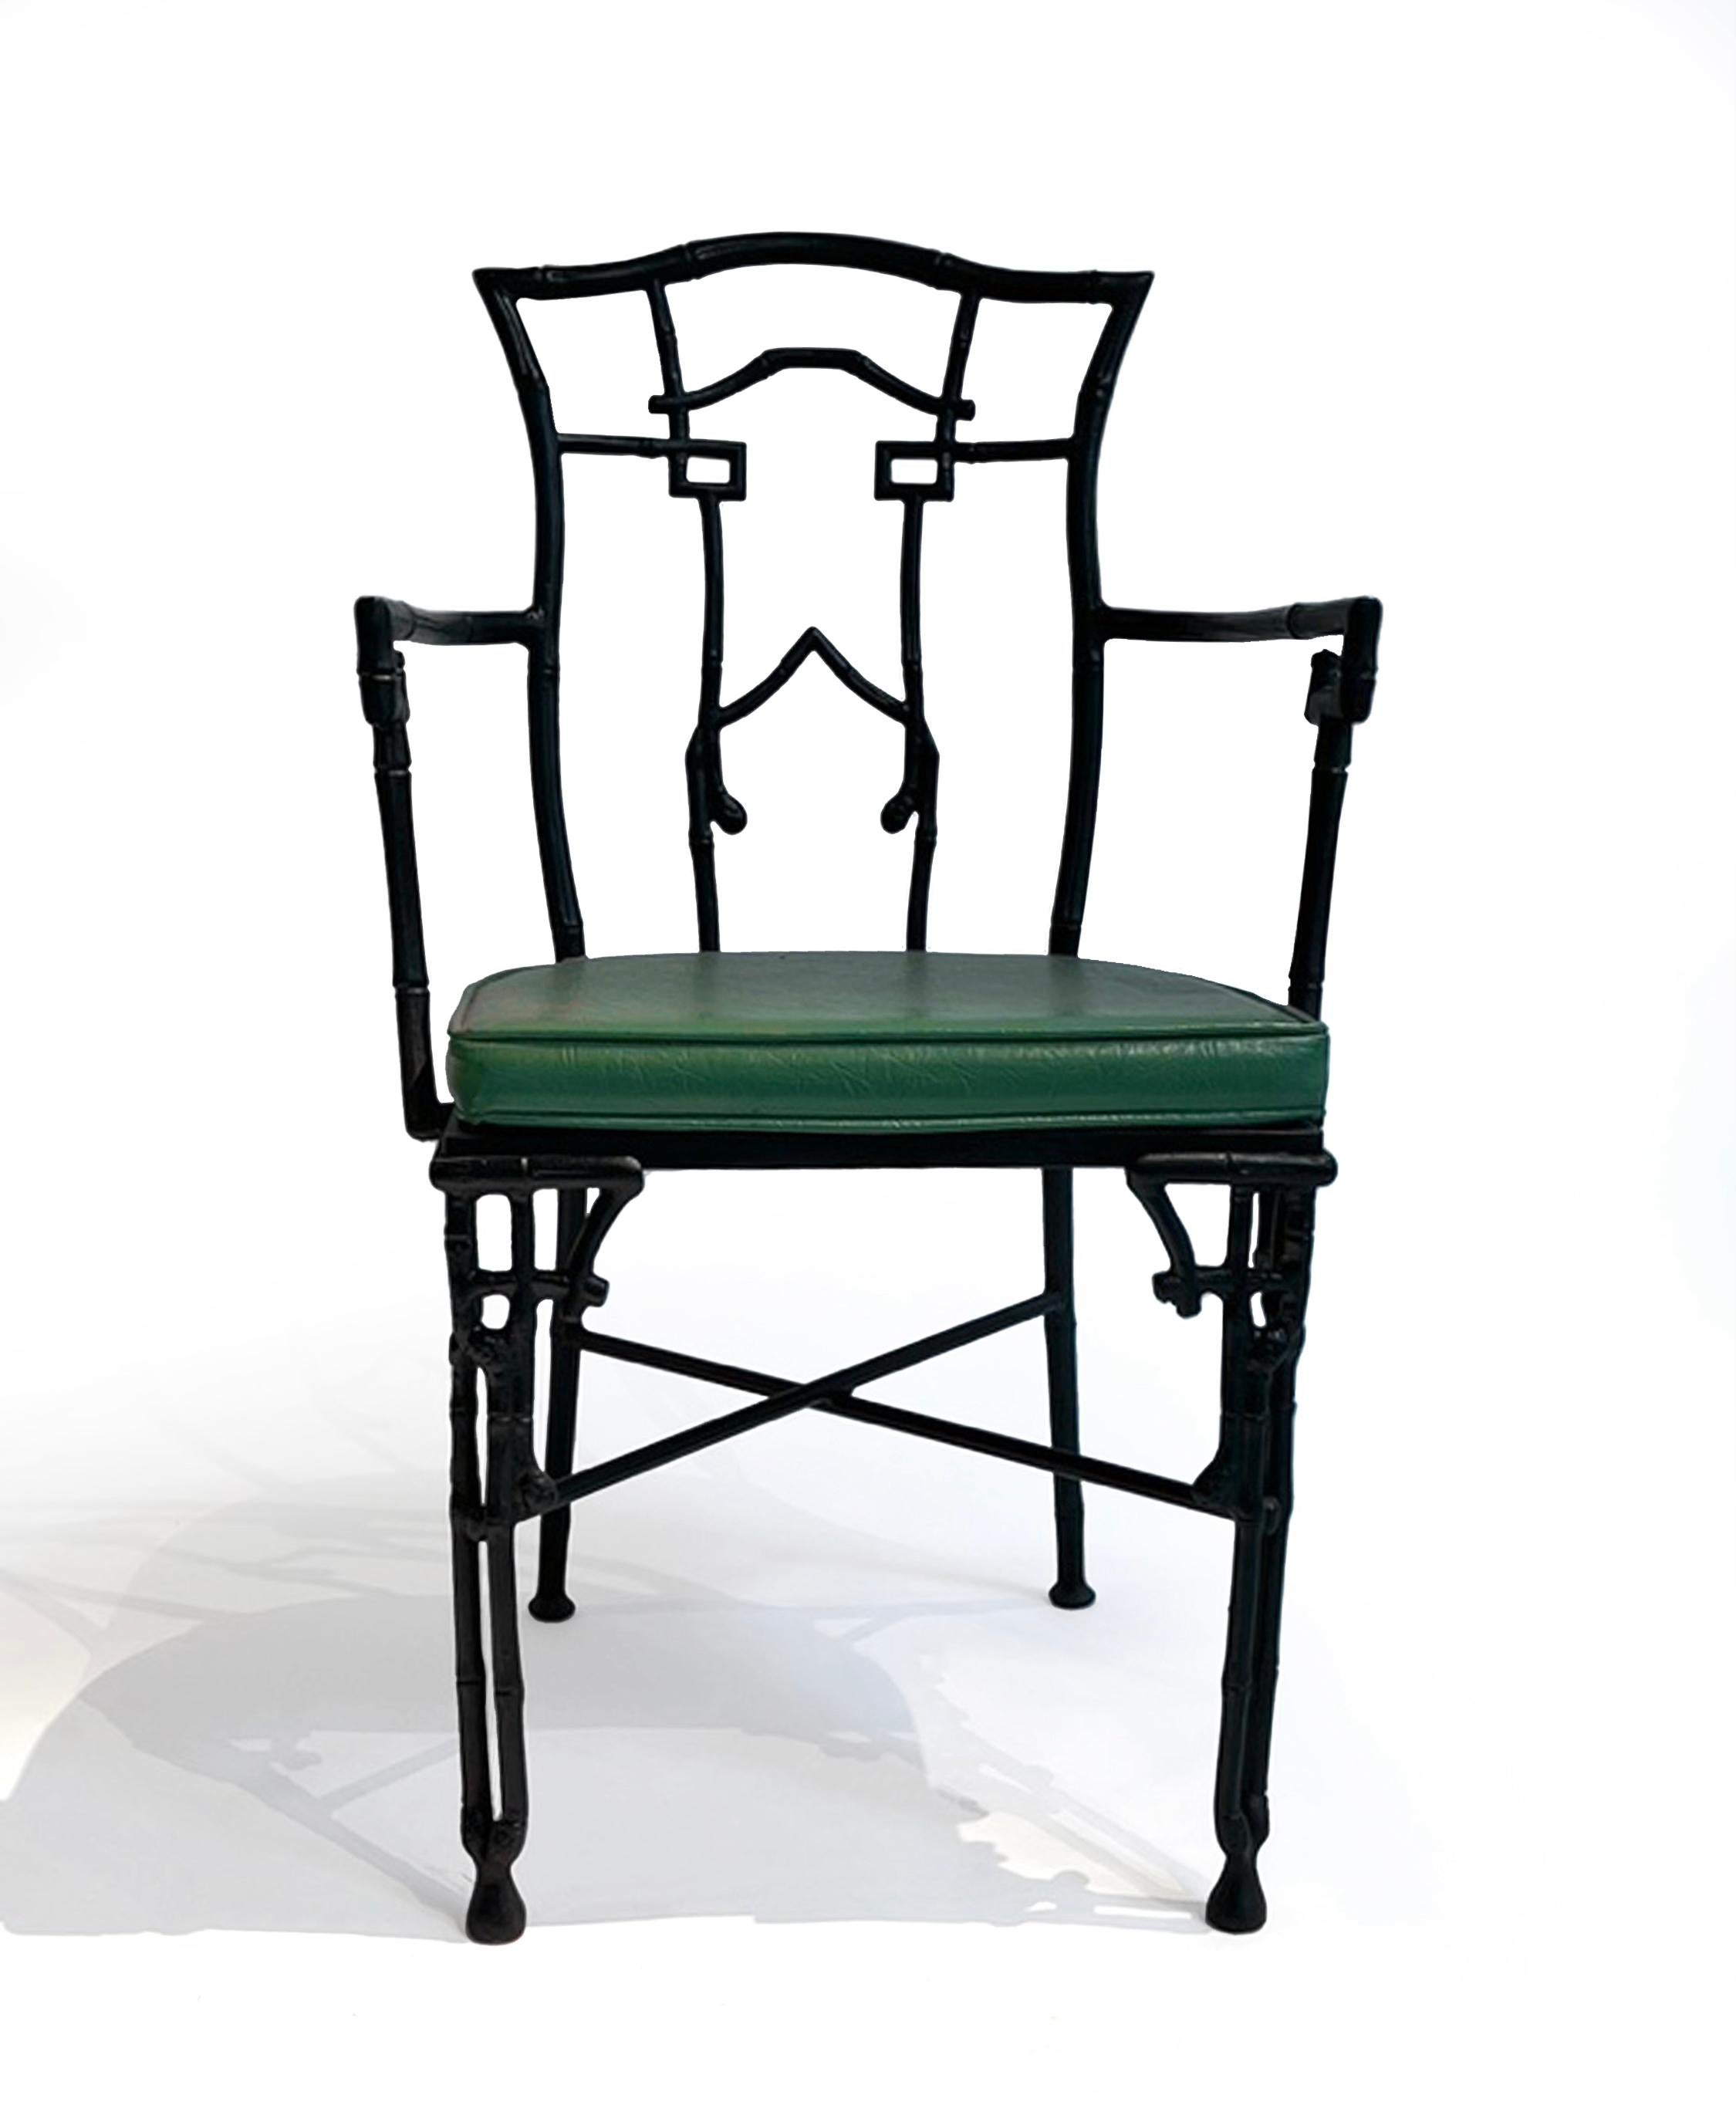 Mid-Century Modern Pair of Iron Patio Chairs